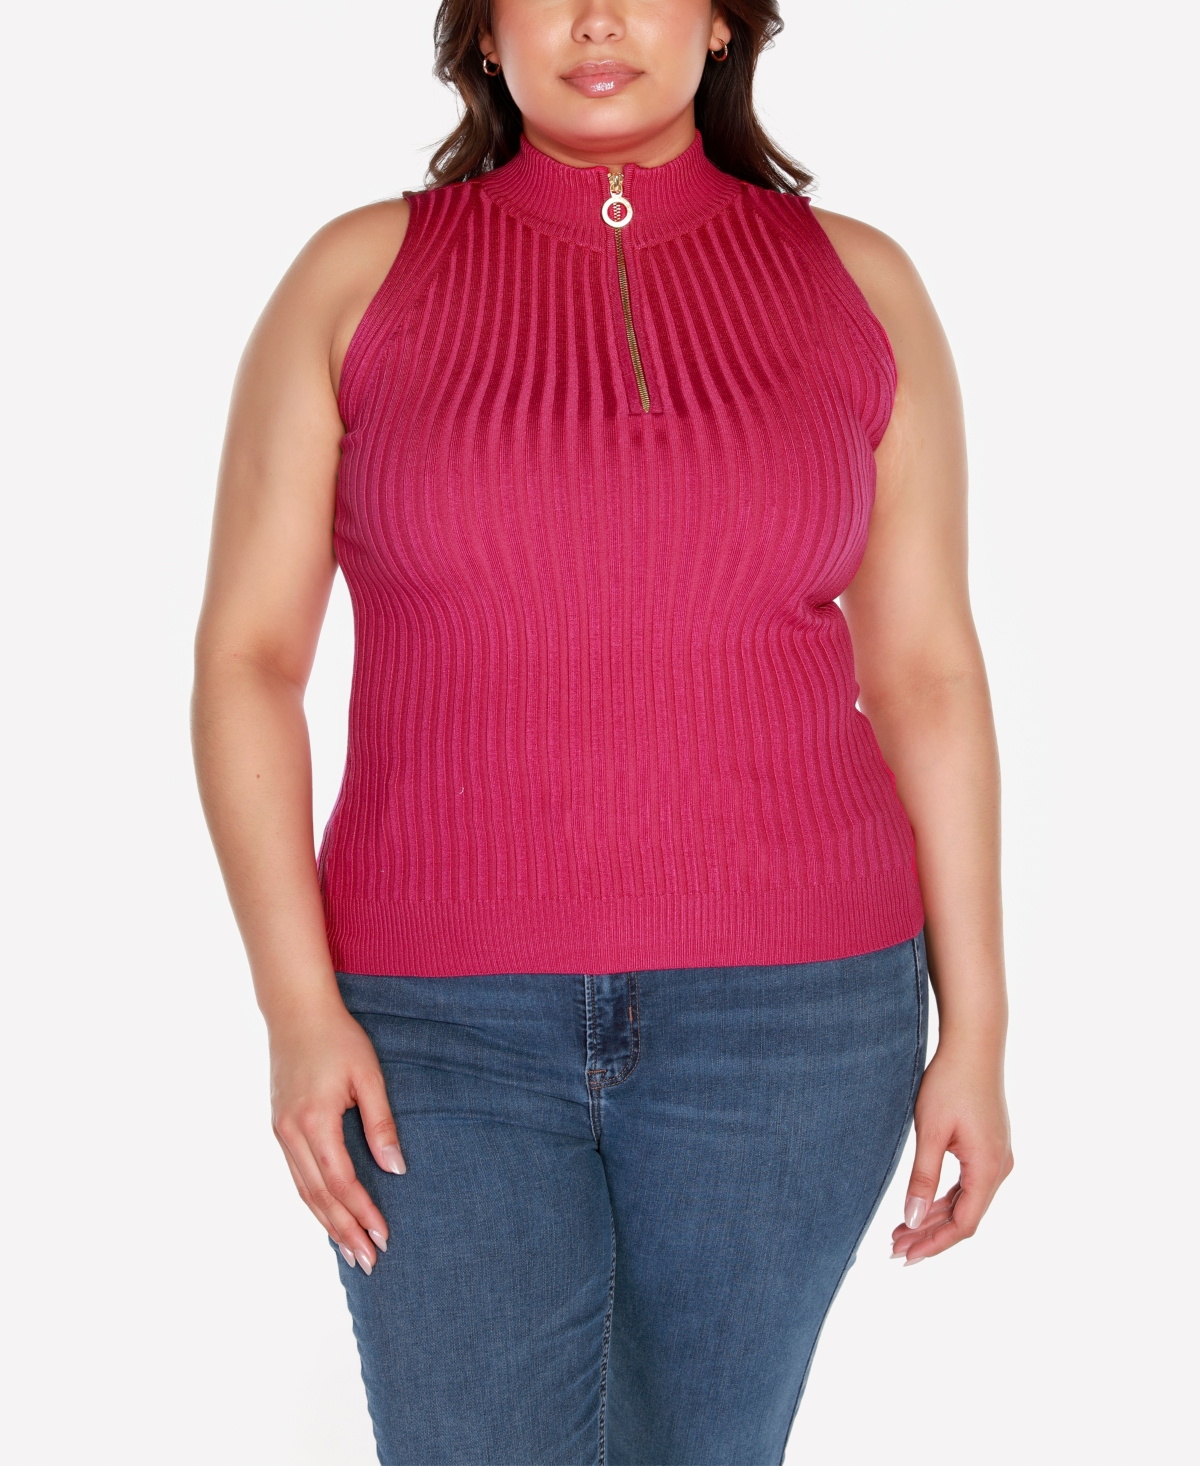 Belldini Black Label Plus Size Sleeveless Quarter Zip Sweater In Raspberry Beret